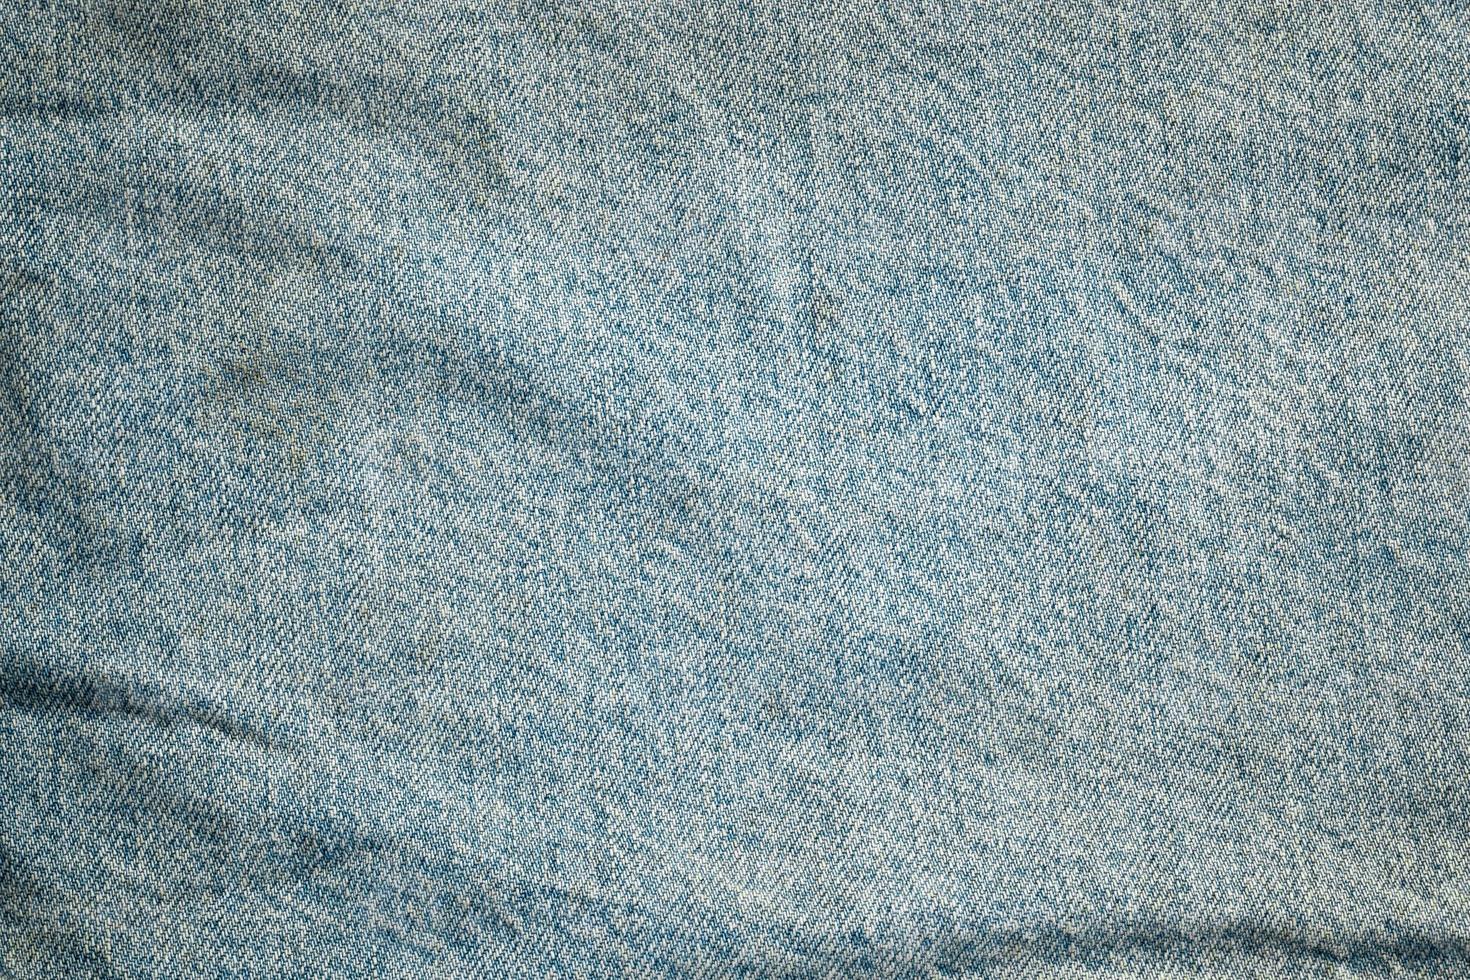 la textura del grunge estilo blue jeans foto